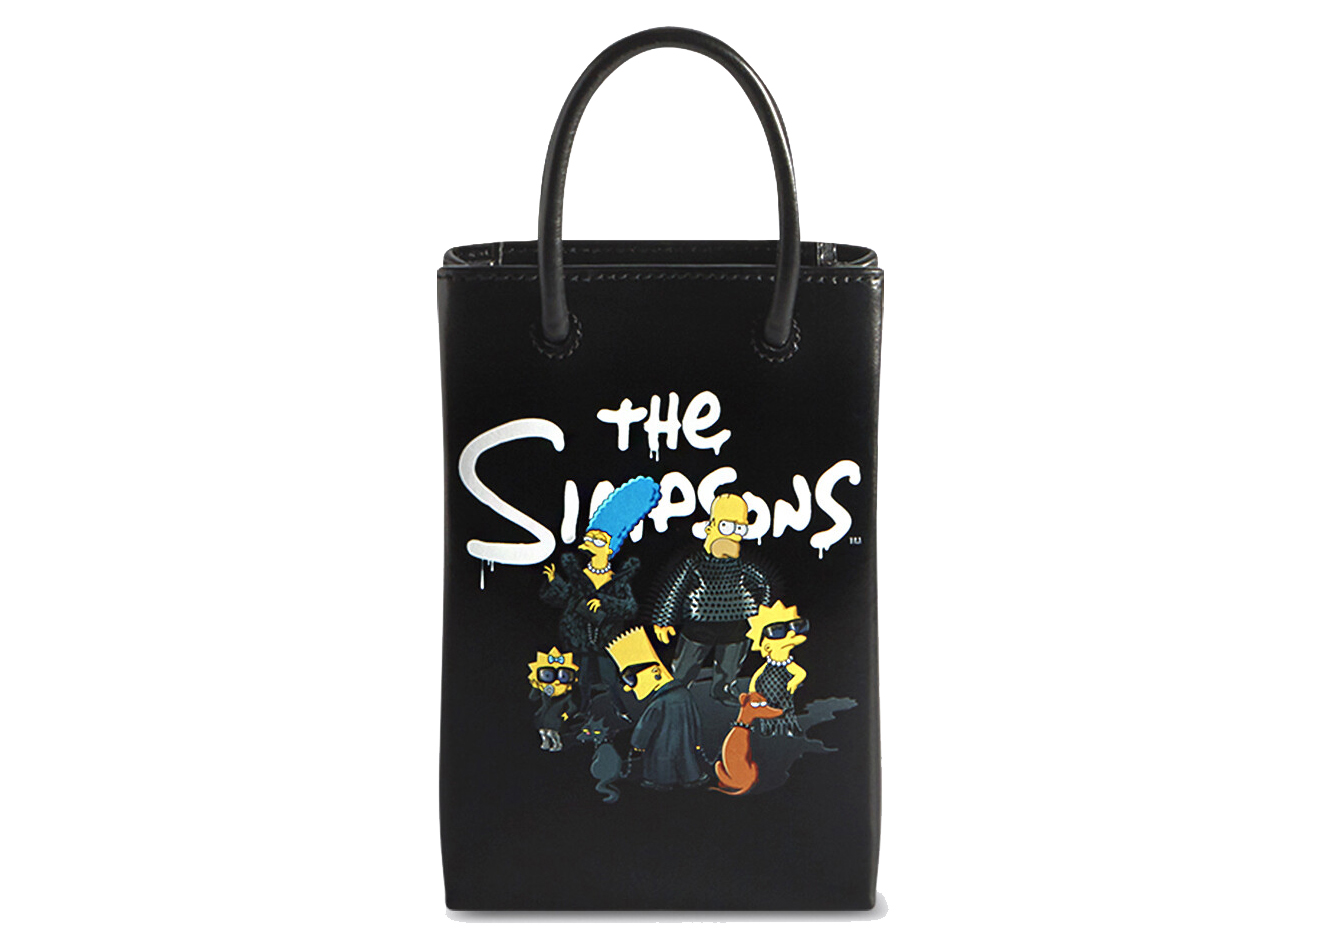 Balenciaga x The Simpsons Mini Shopping Bag Black